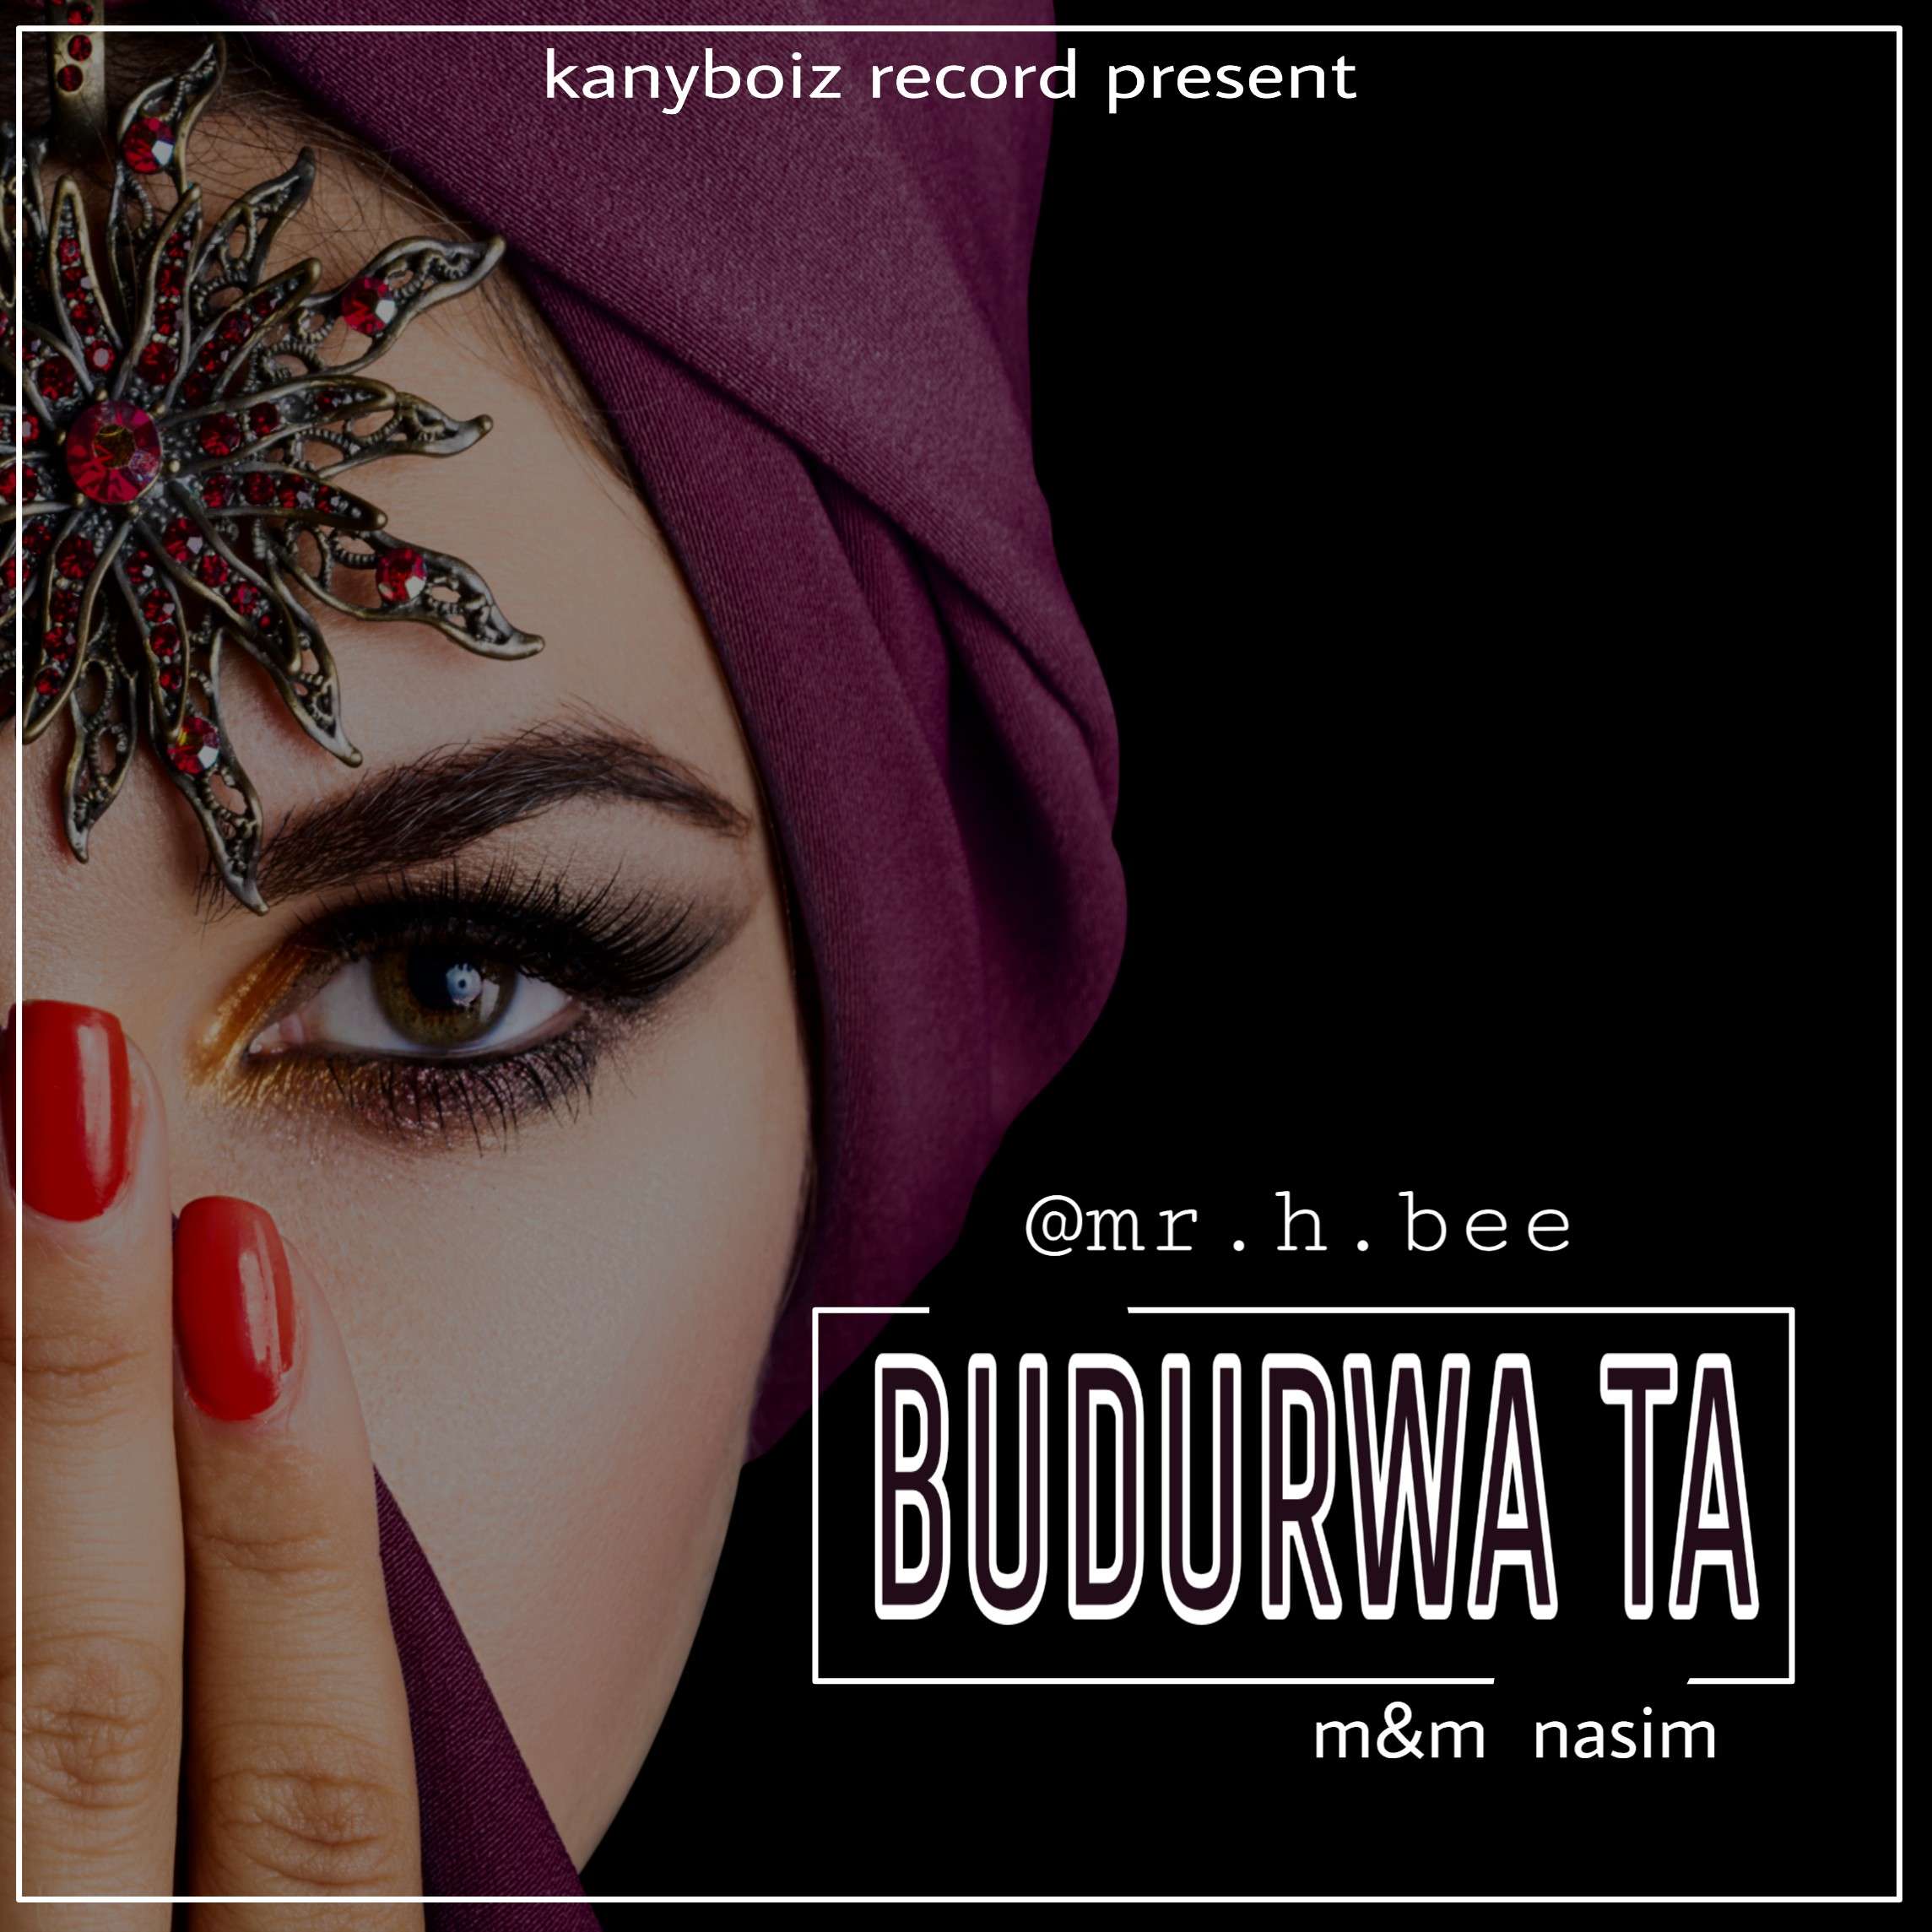 Mr. H Bee - Budurwata MP3 Free Download